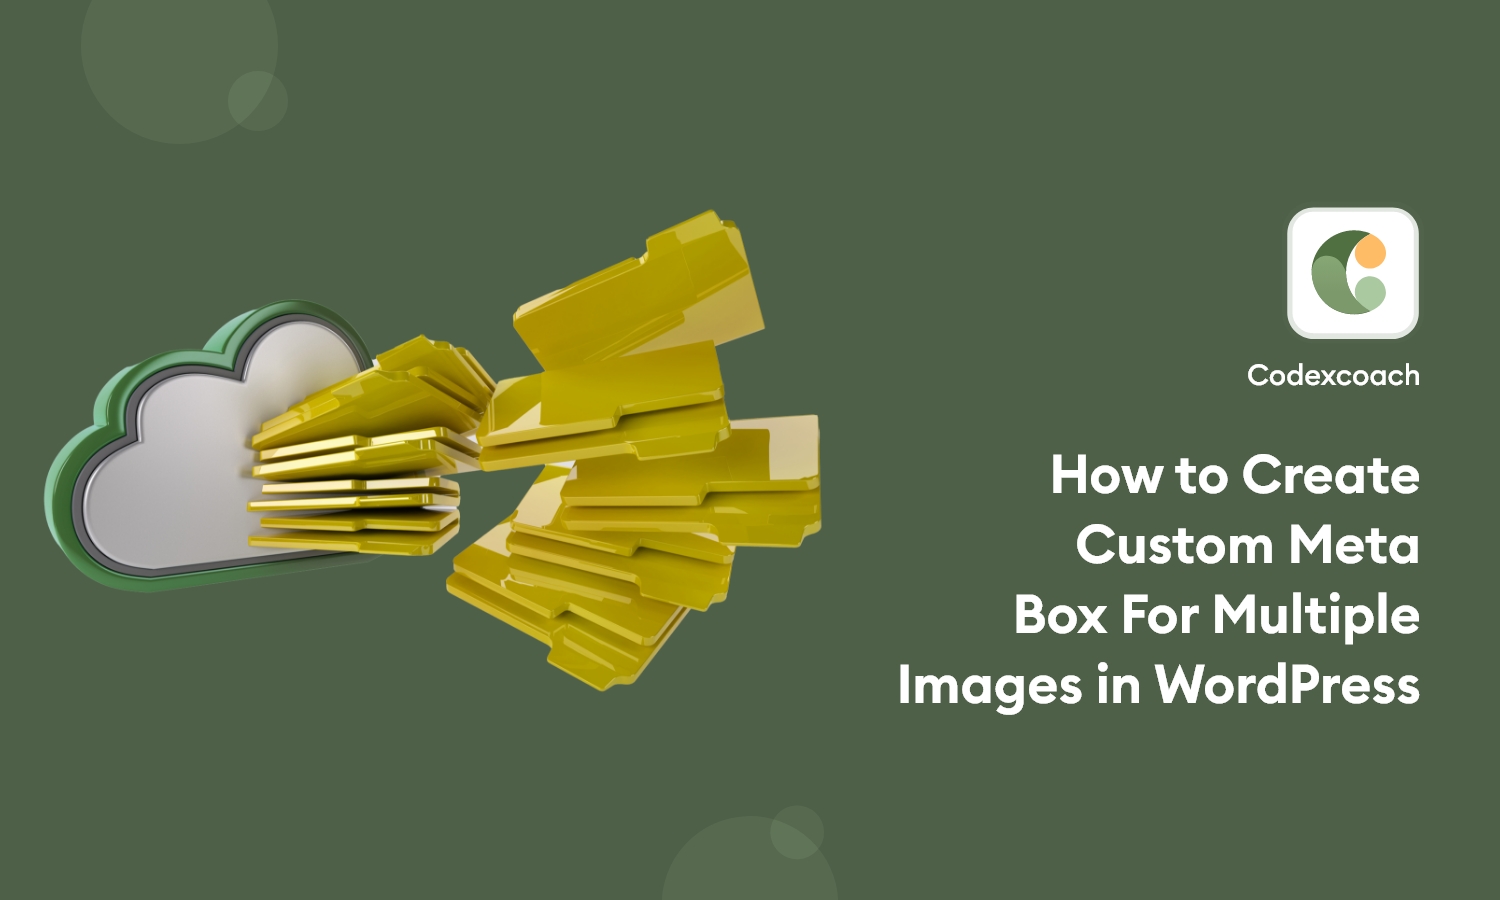 How to Create Custom Meta Box For Multiple Images in WordPress